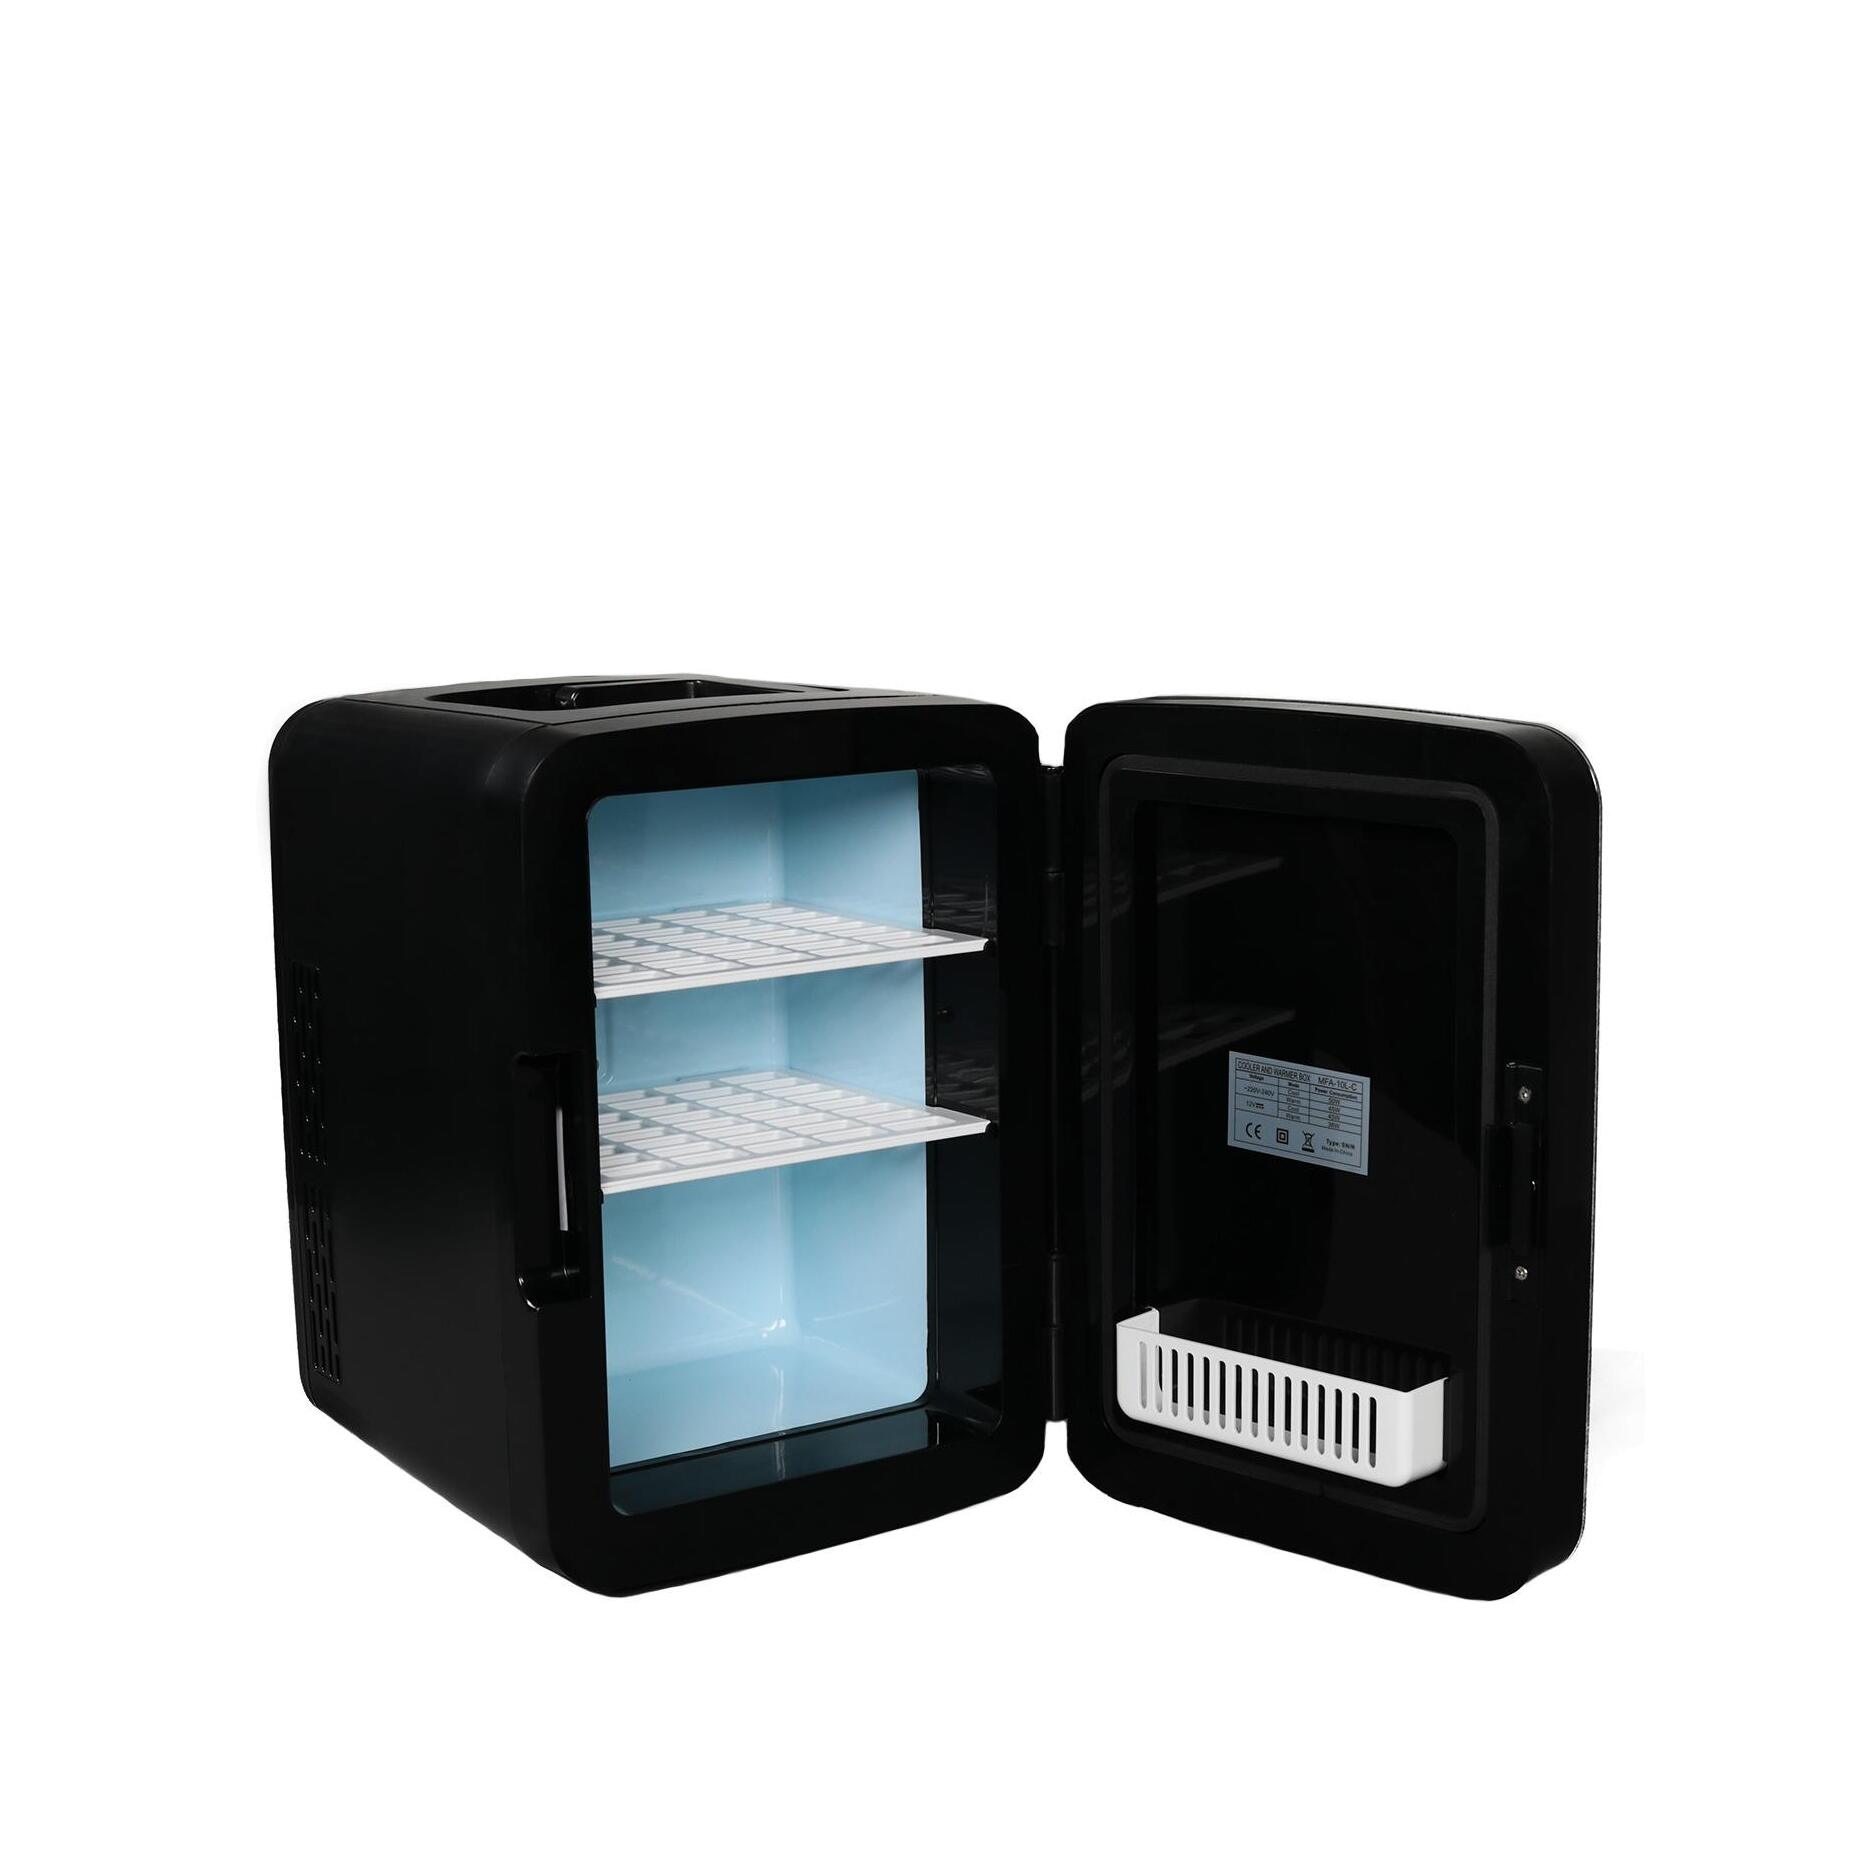 Мини-холодильник Lux Box Display Black VISAGEHALL